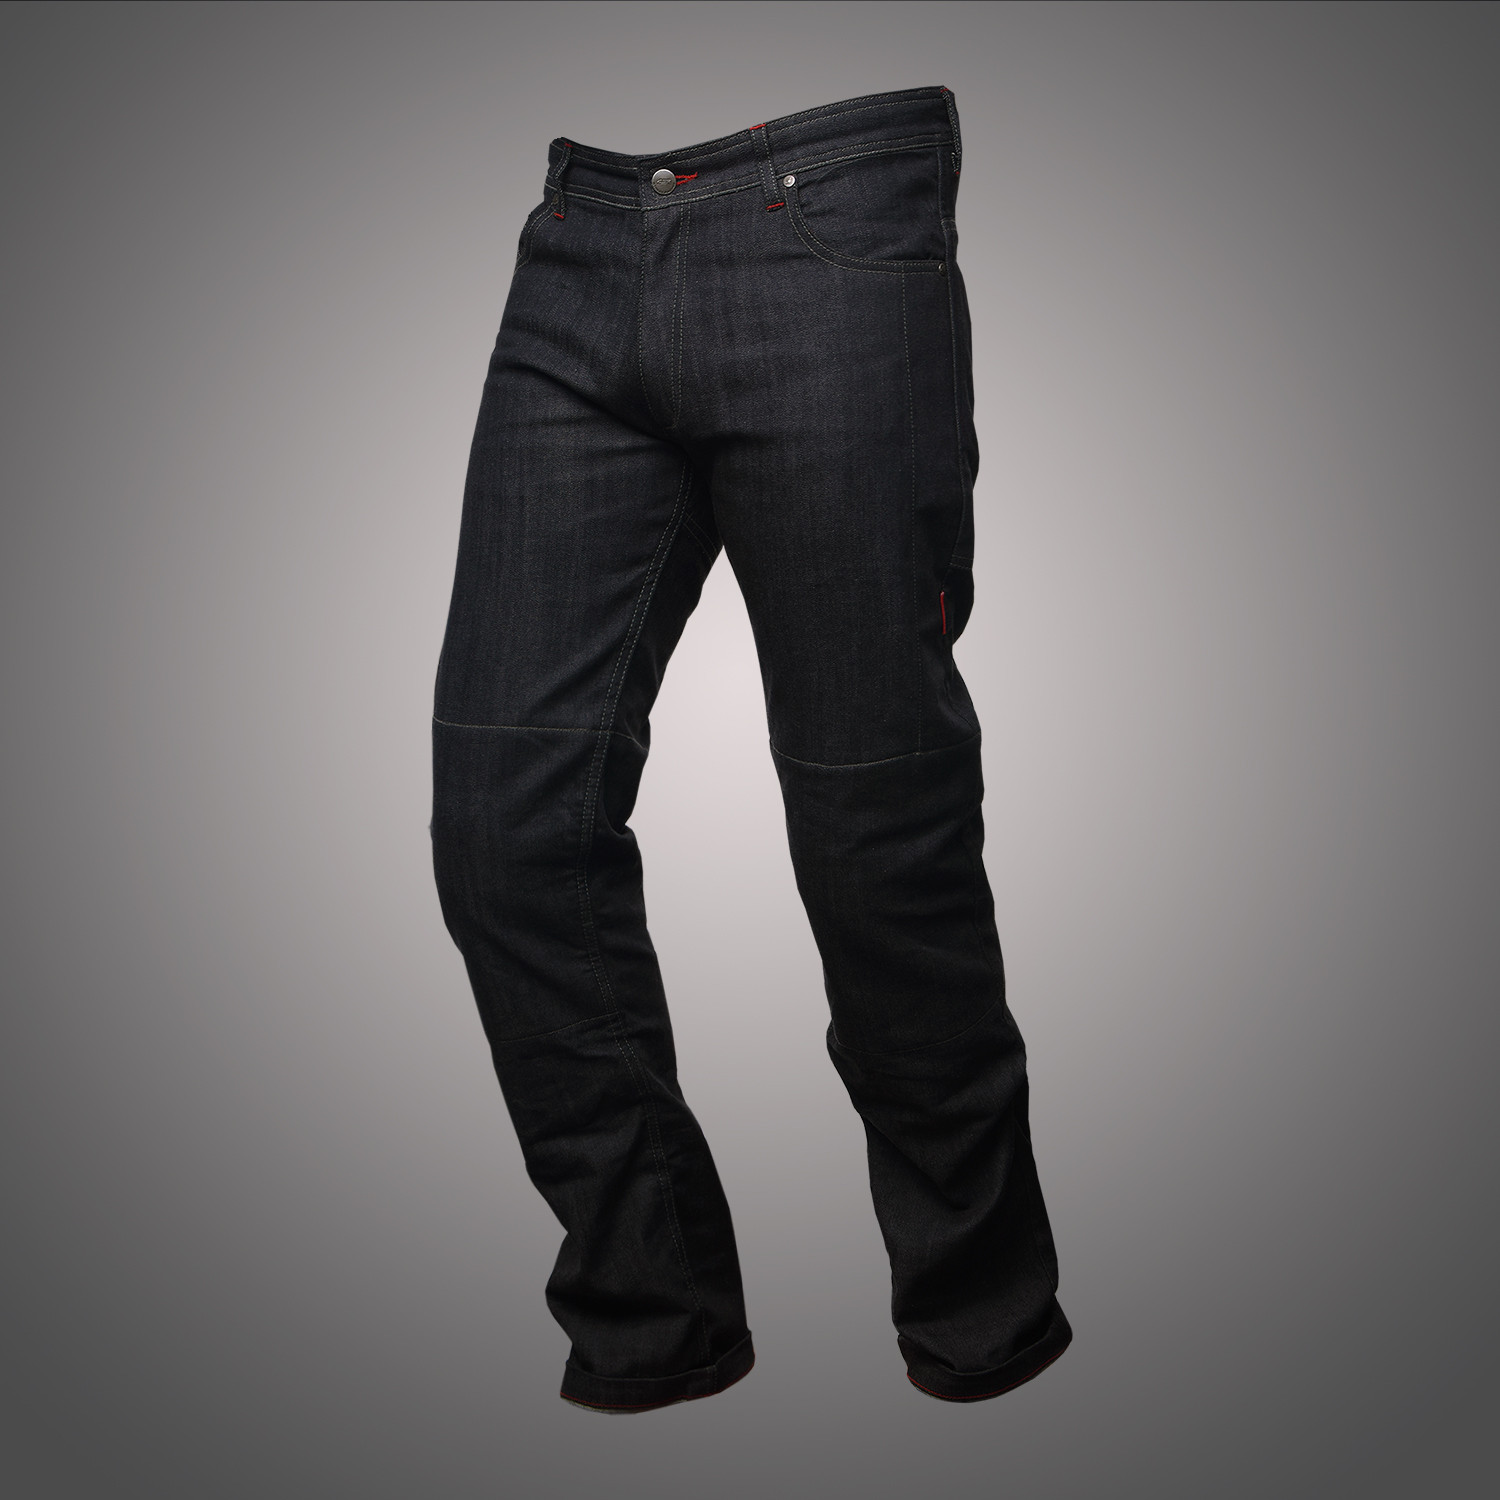 4SR motorcycle jeans Cool Black